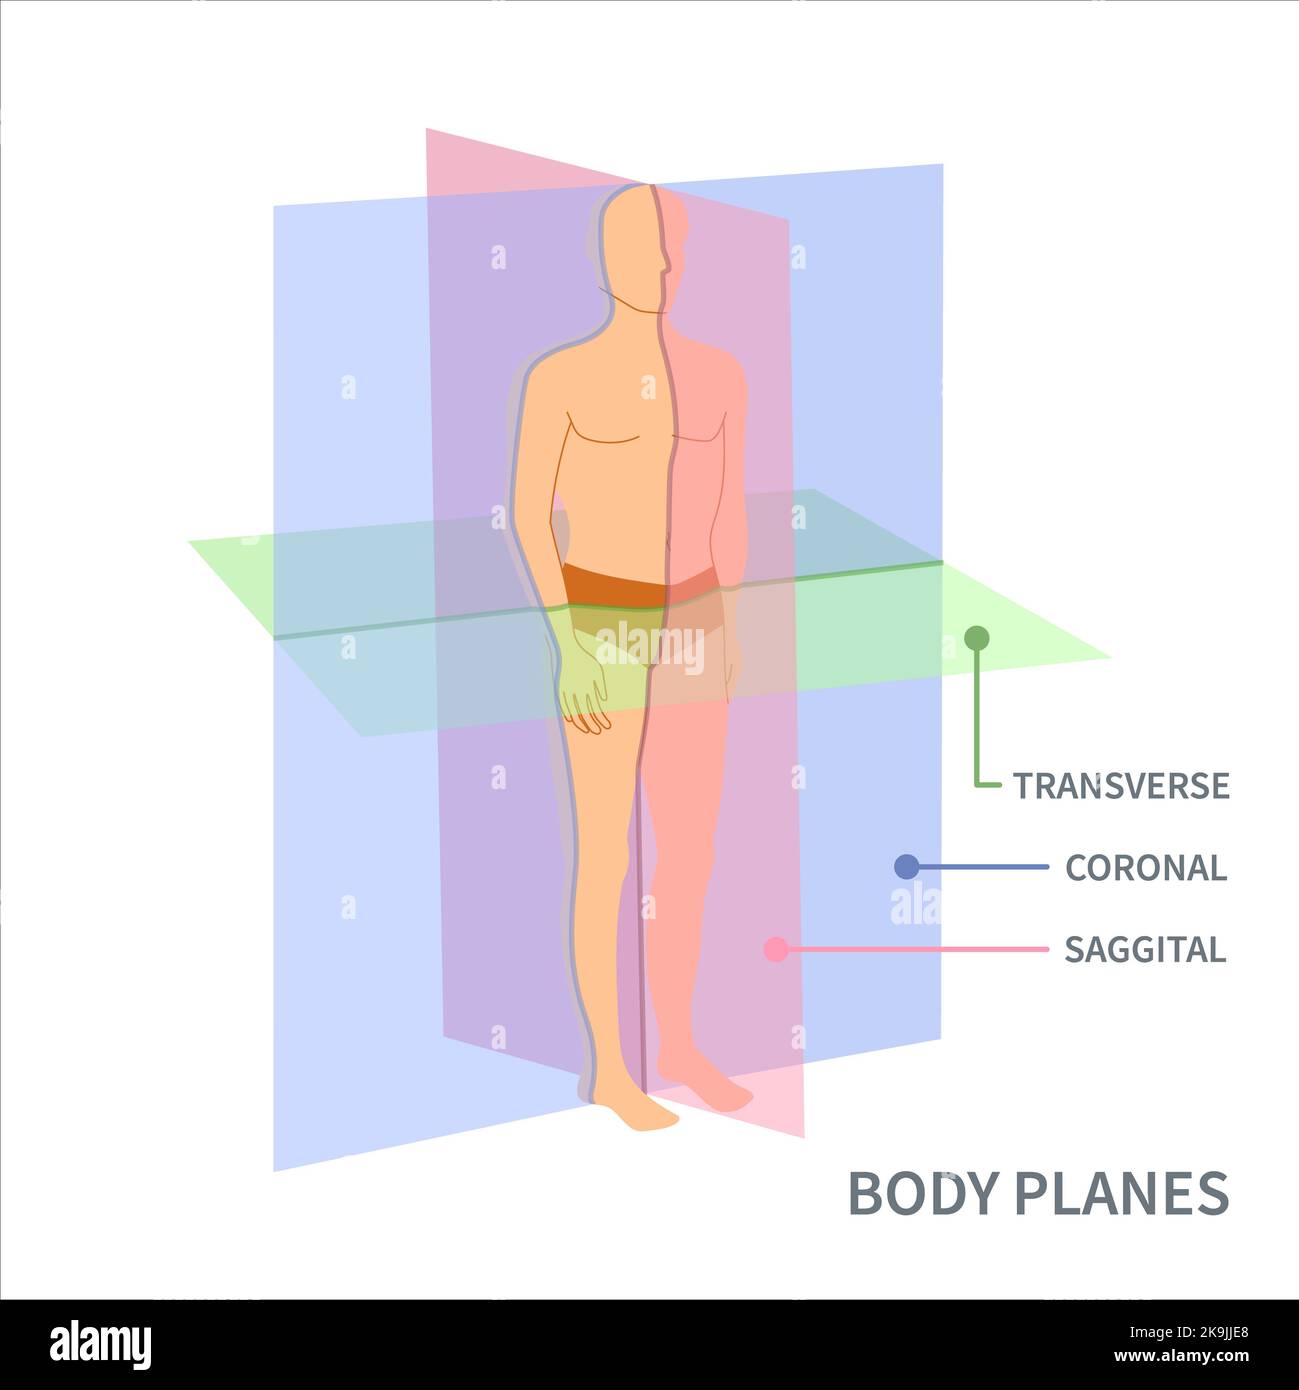 Body planes, illustration Stock Photo